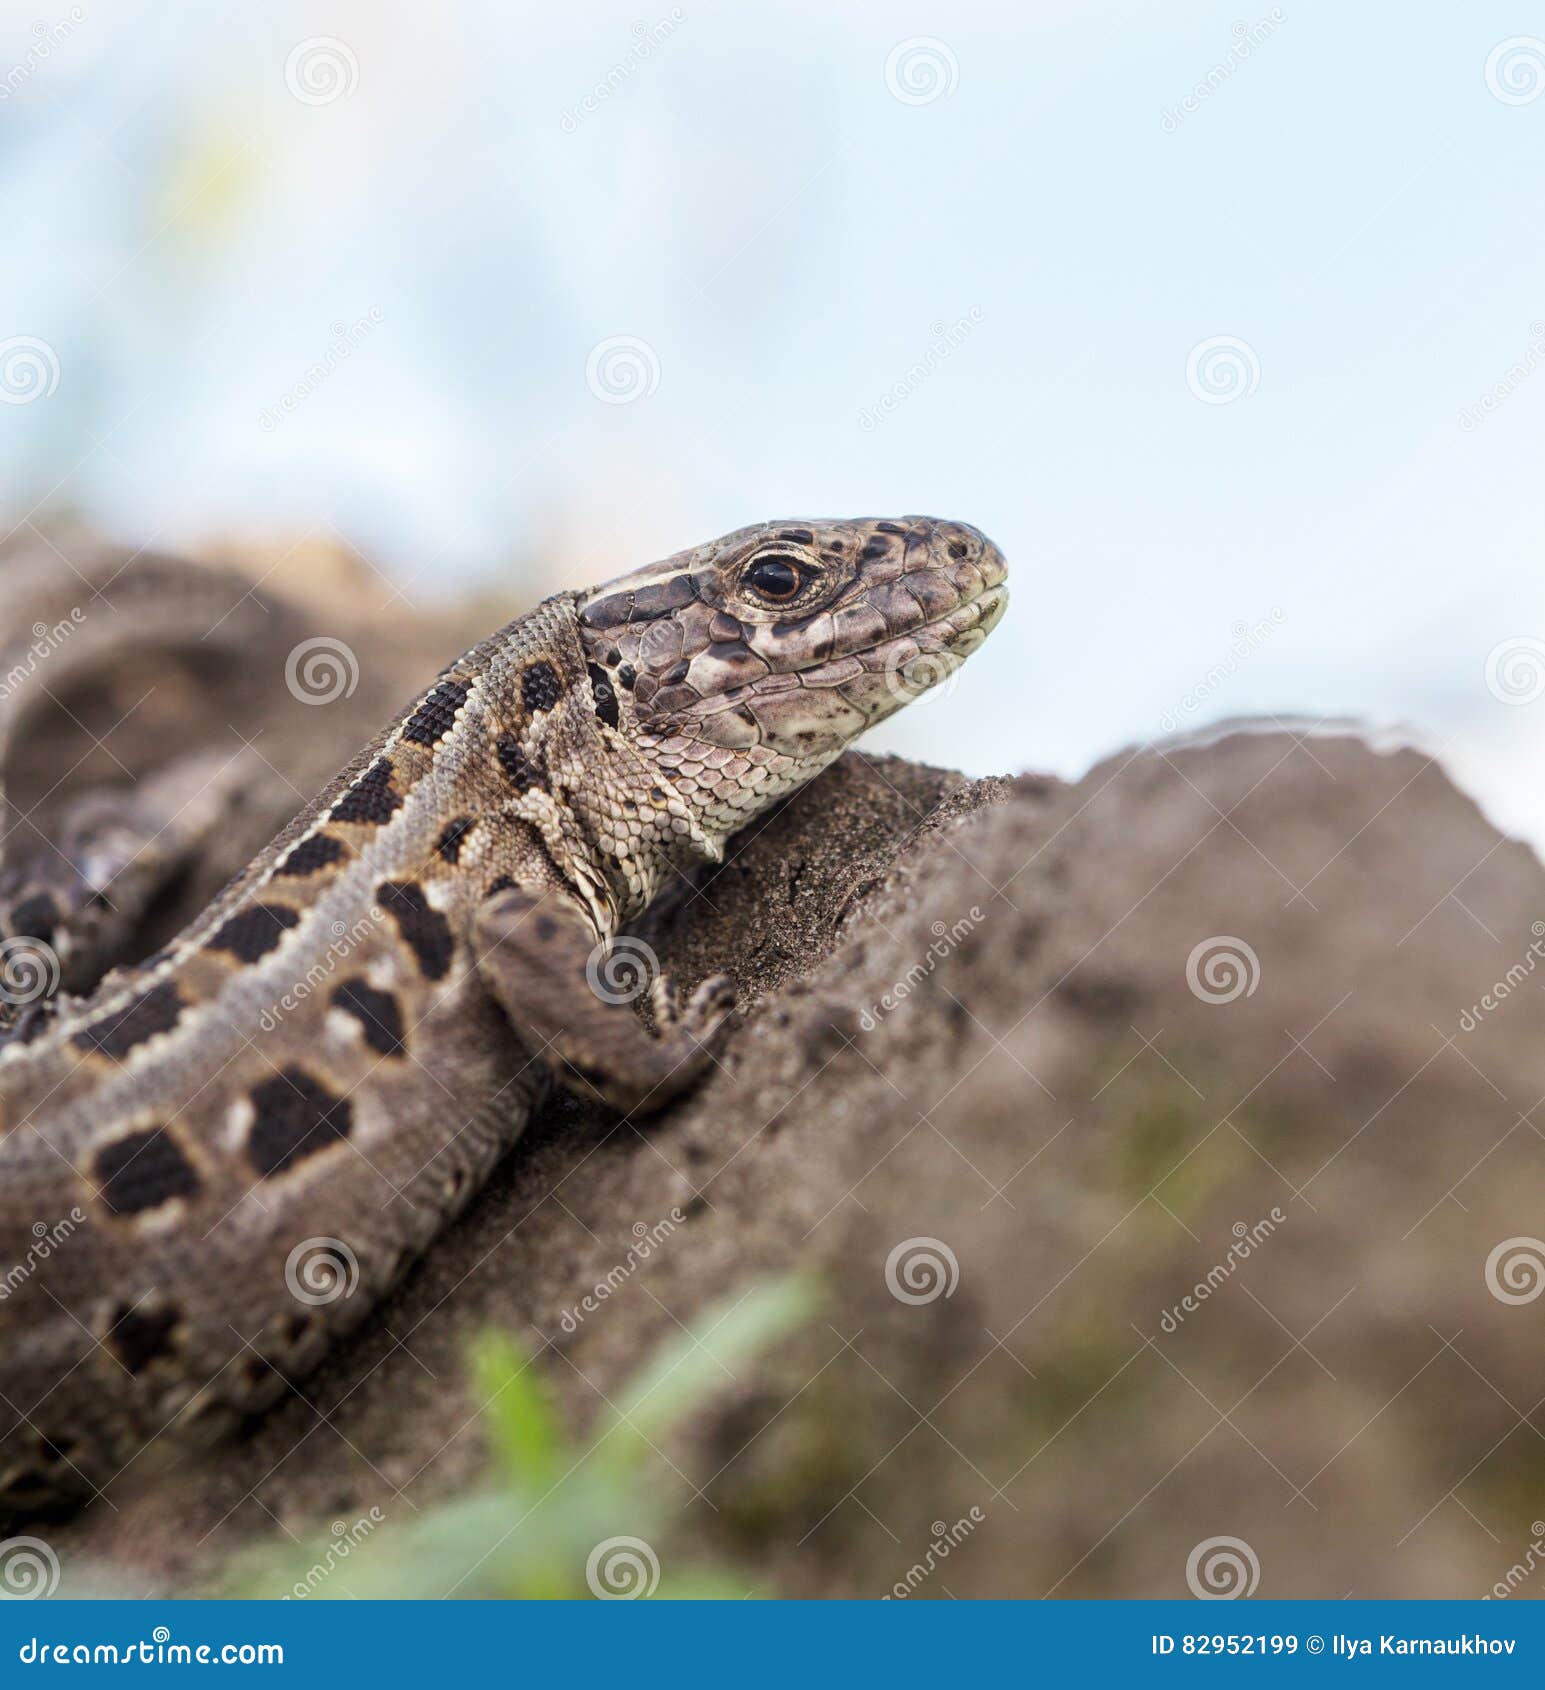 Portrait of sand lizard. Macro sand lizard shot with natural background